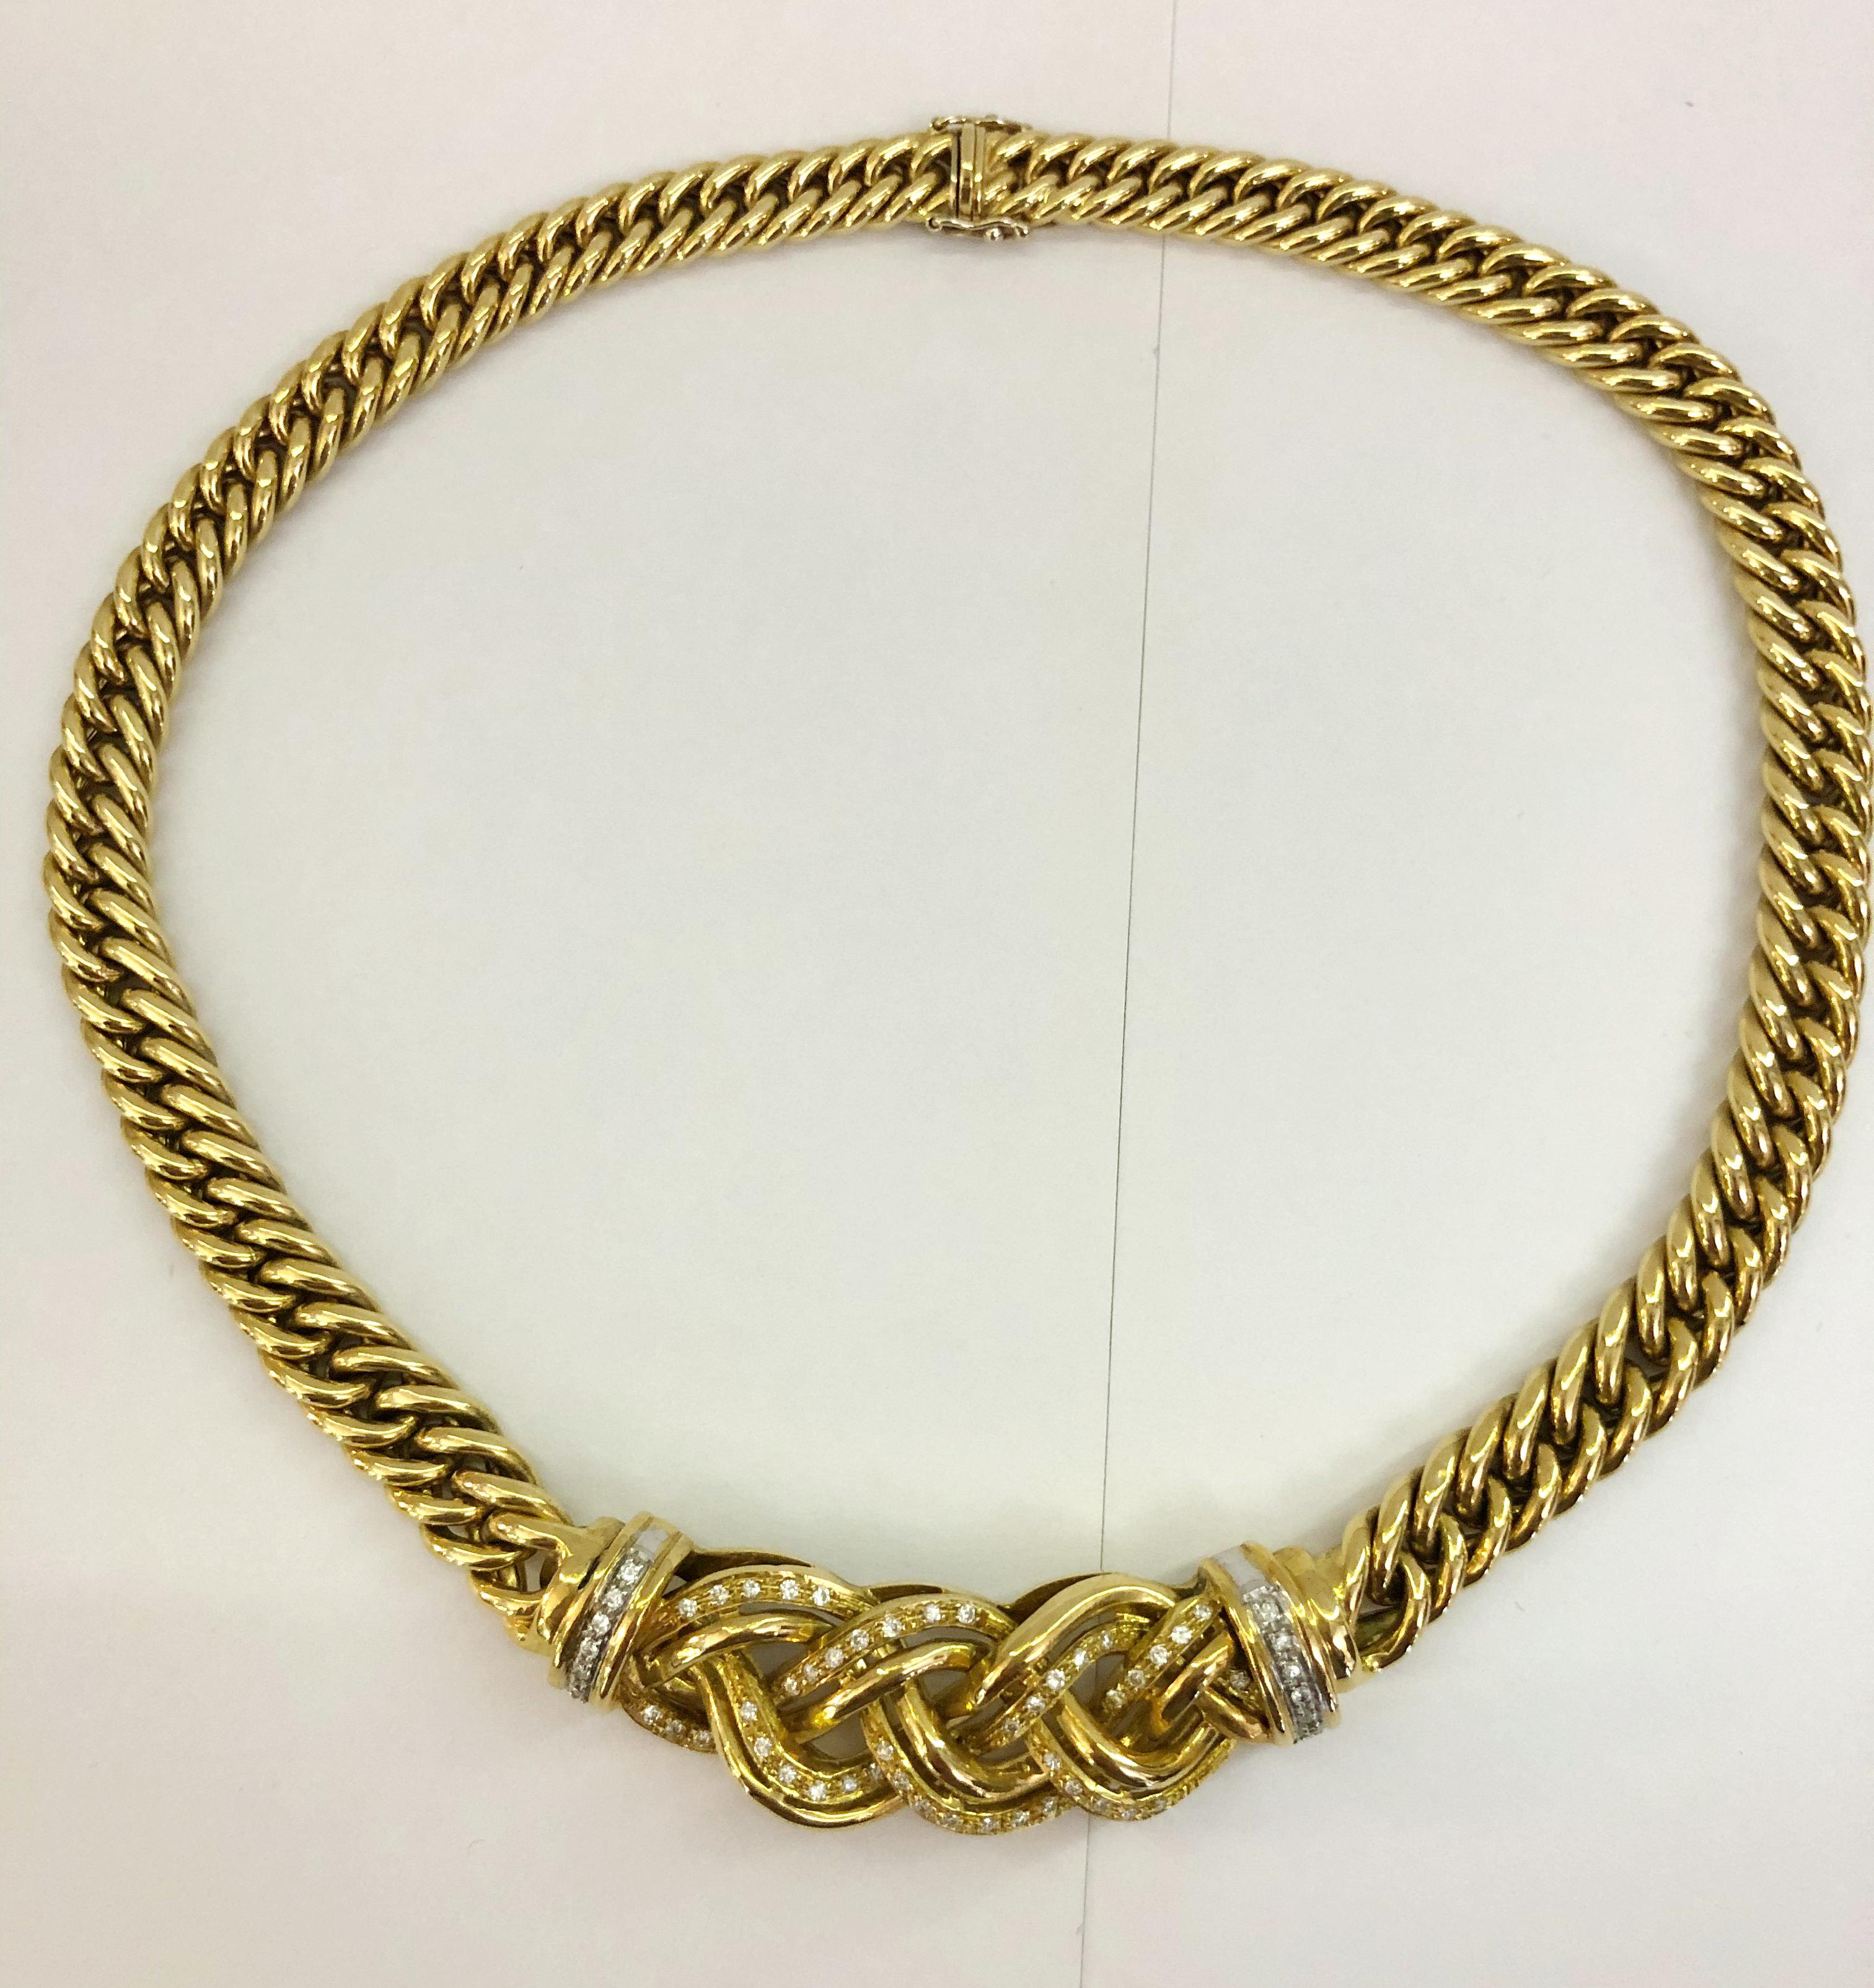 Vintage 18 karat yellow gold Grumetta Scalare necklace with brilliant diamonds, Italy 1940s
Length 48 cm